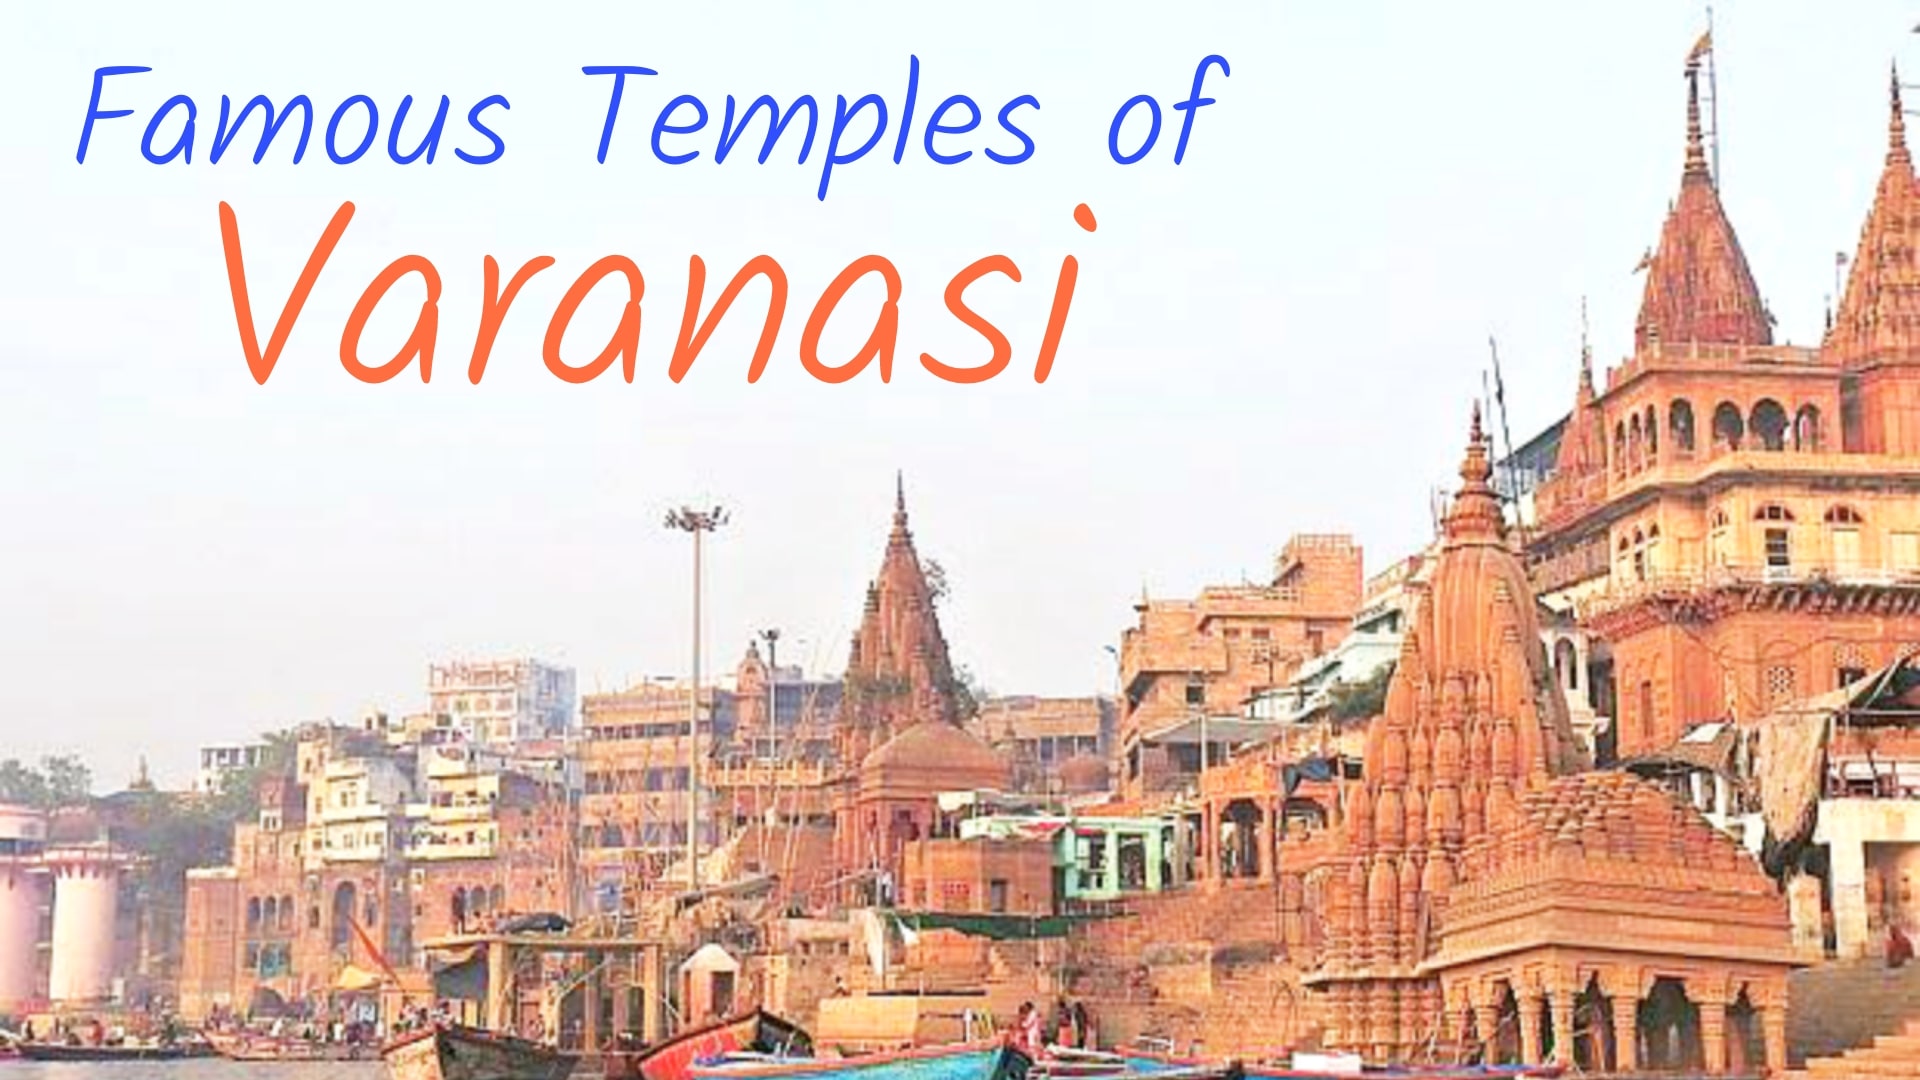 How many Temples are in Varanasi?